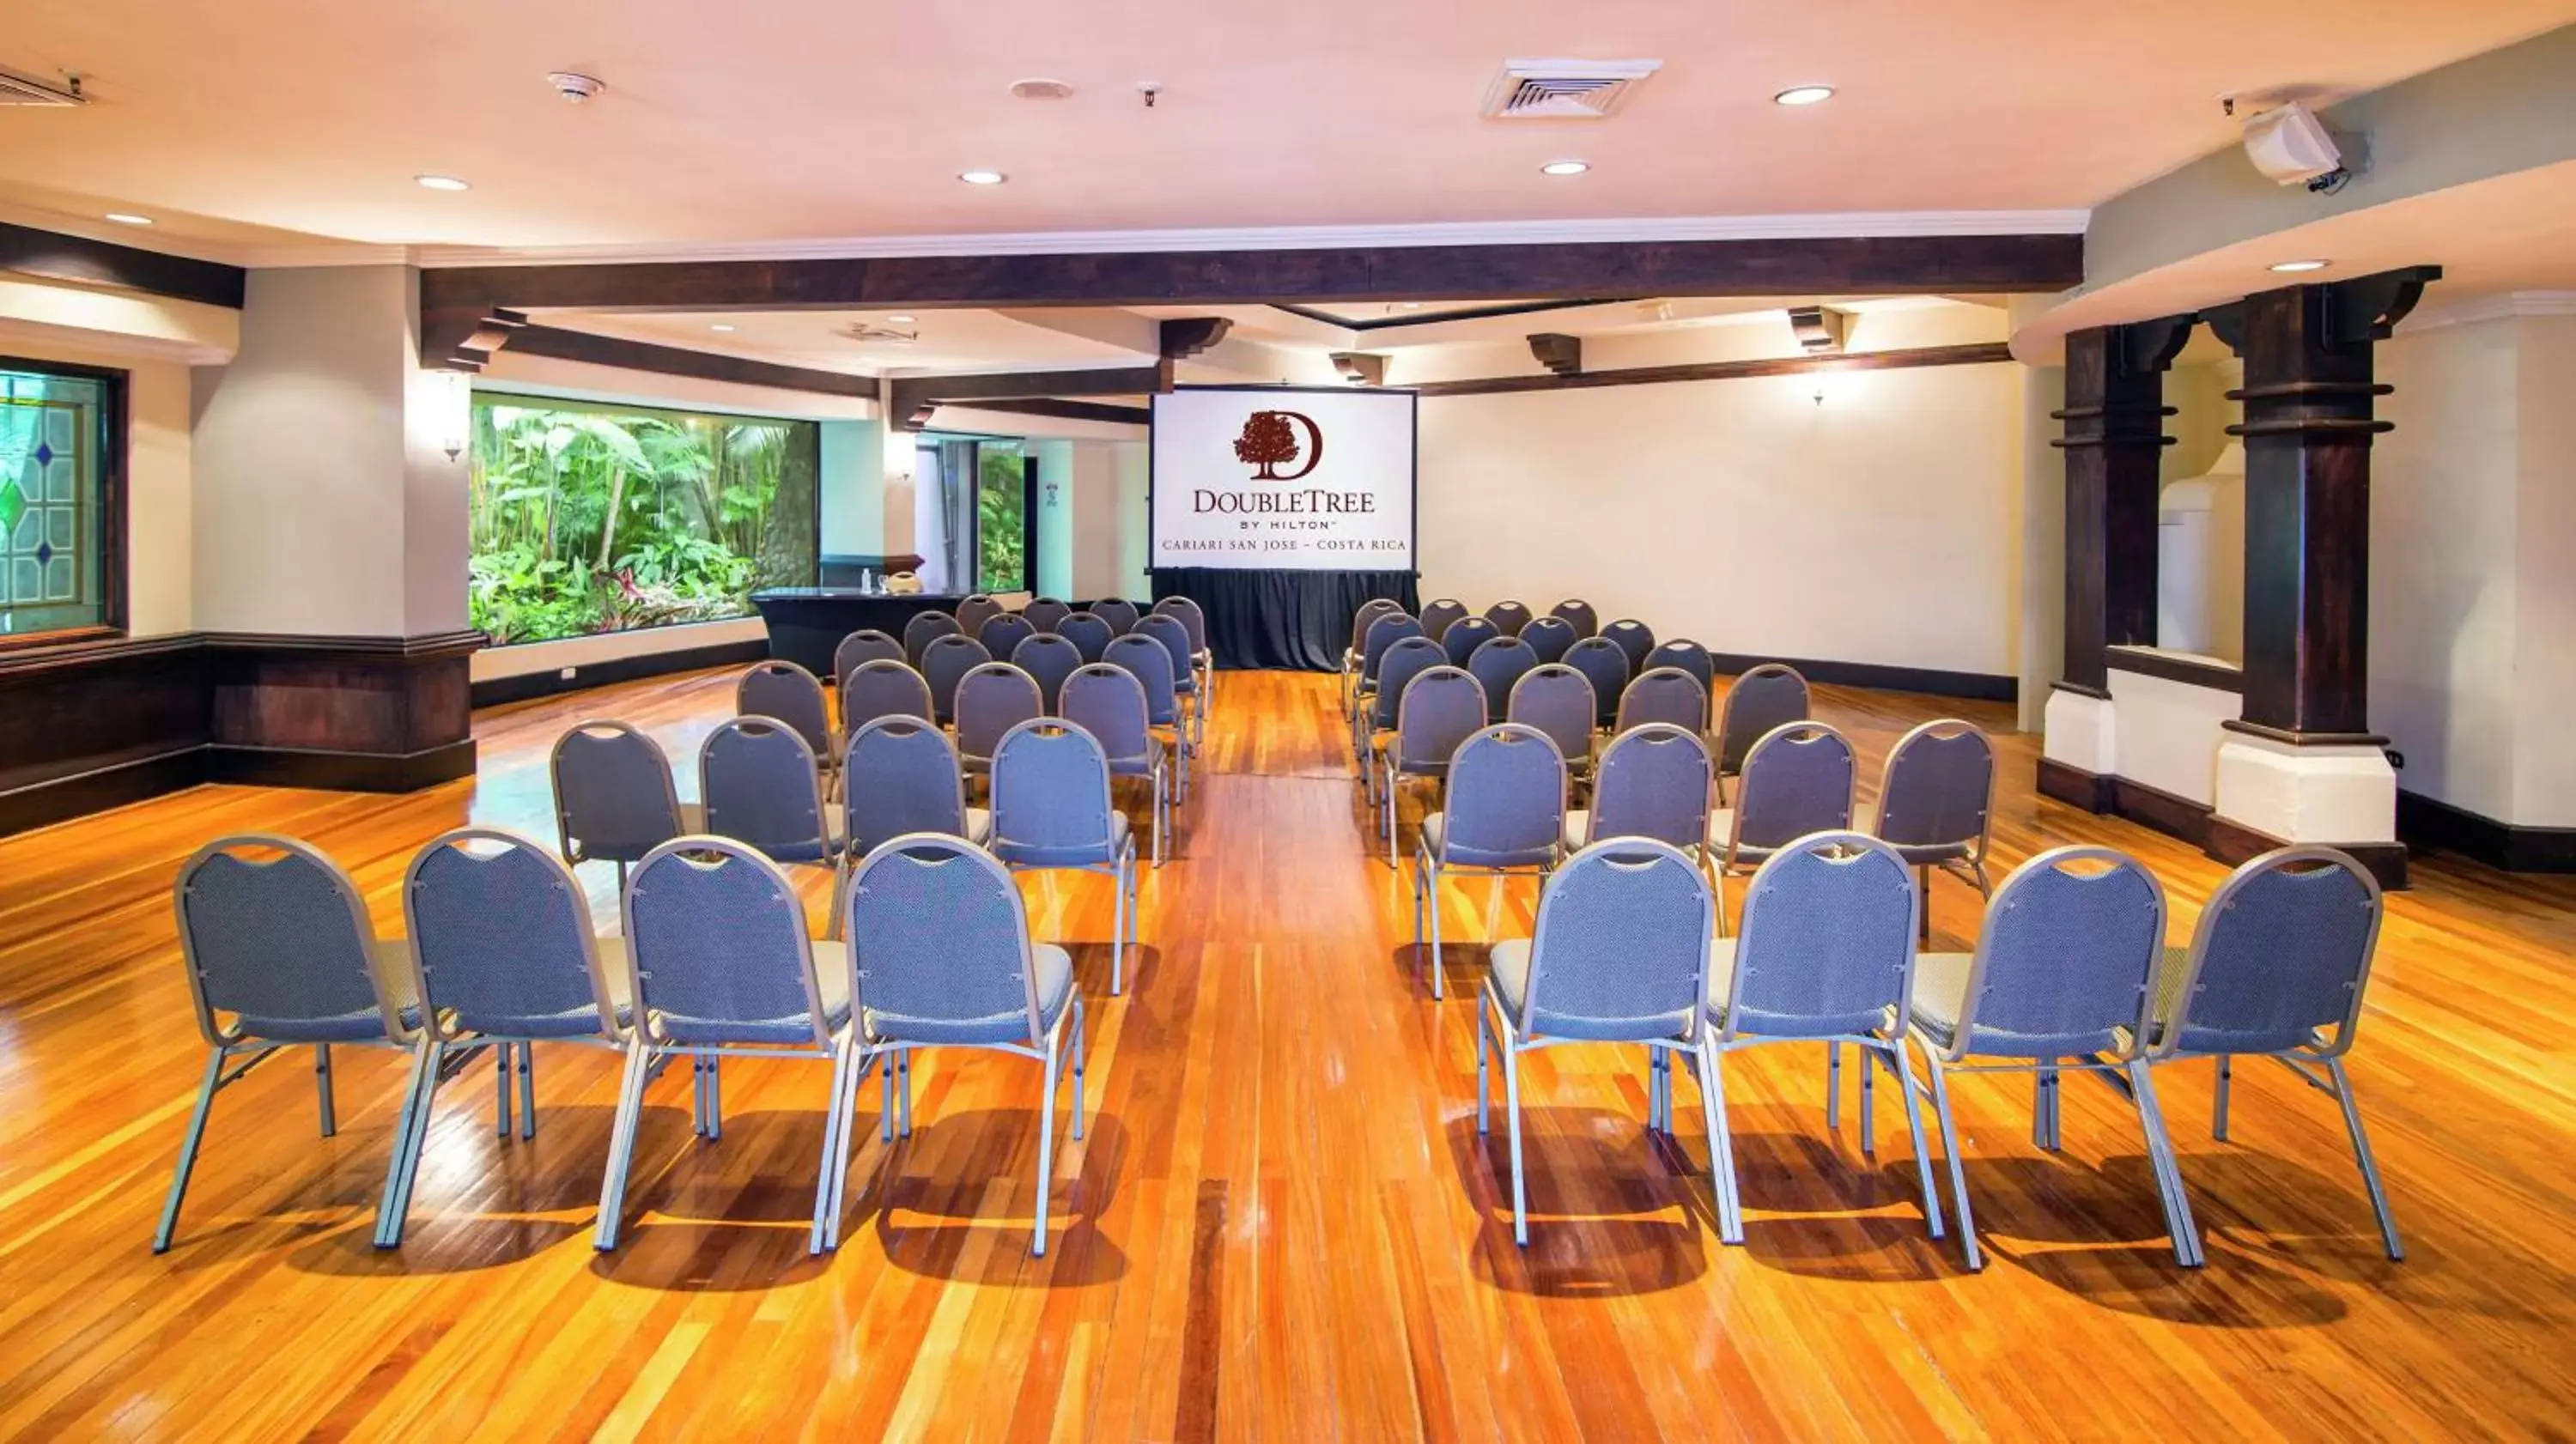 Meeting/conference room in Hilton Cariari DoubleTree San Jose - Costa Rica